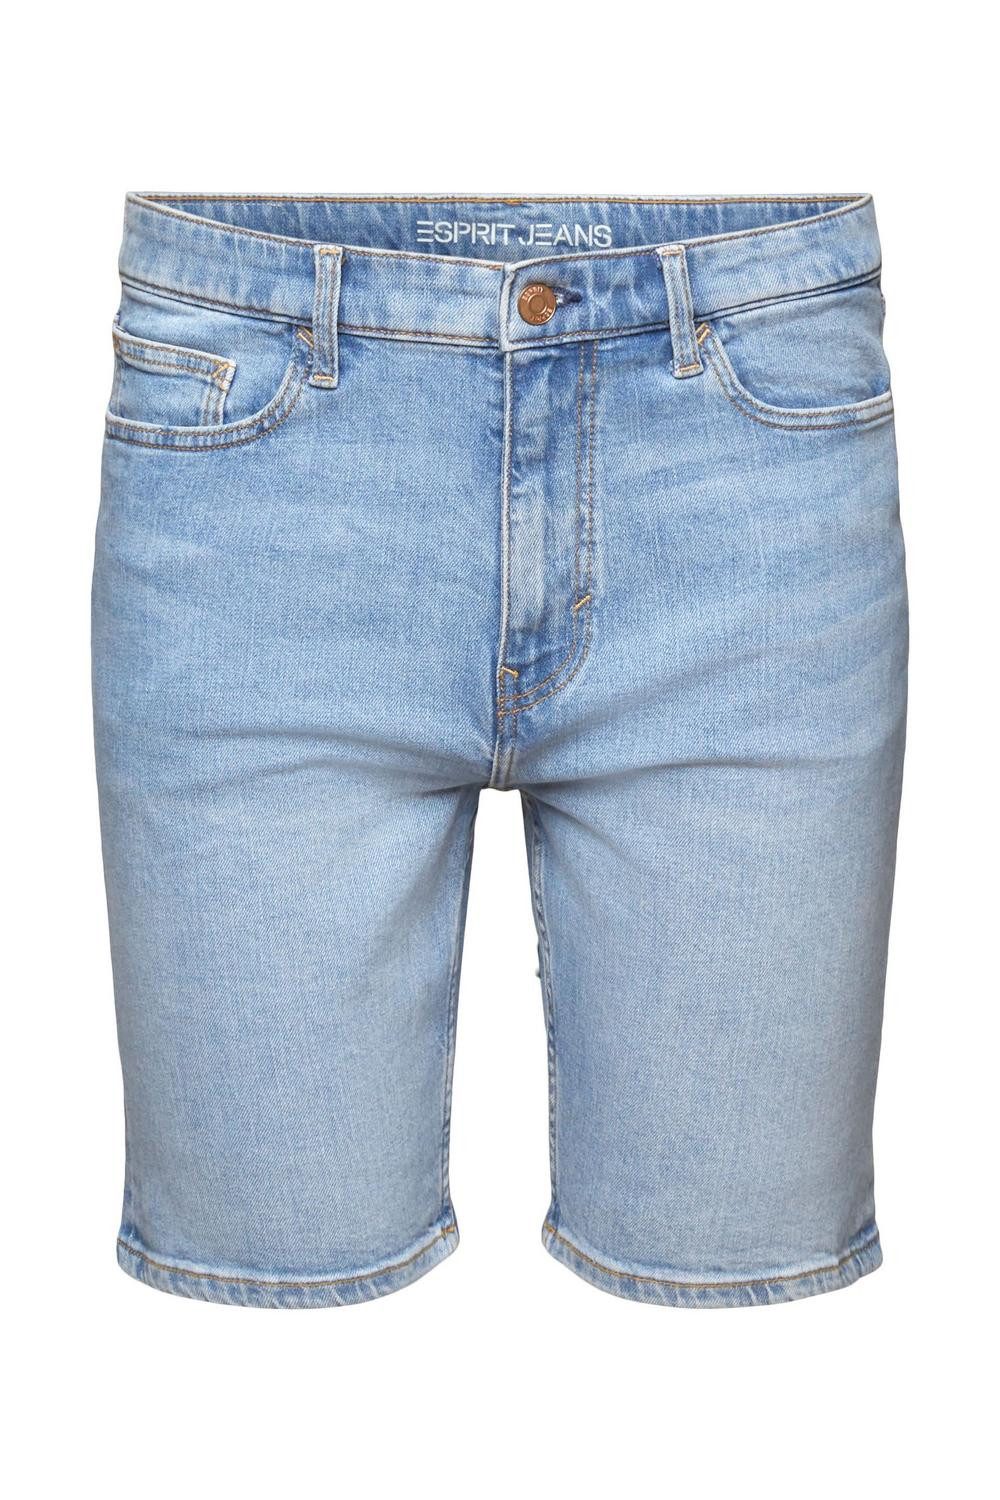 Esprit Regular-fit-Jeans Shorts denim